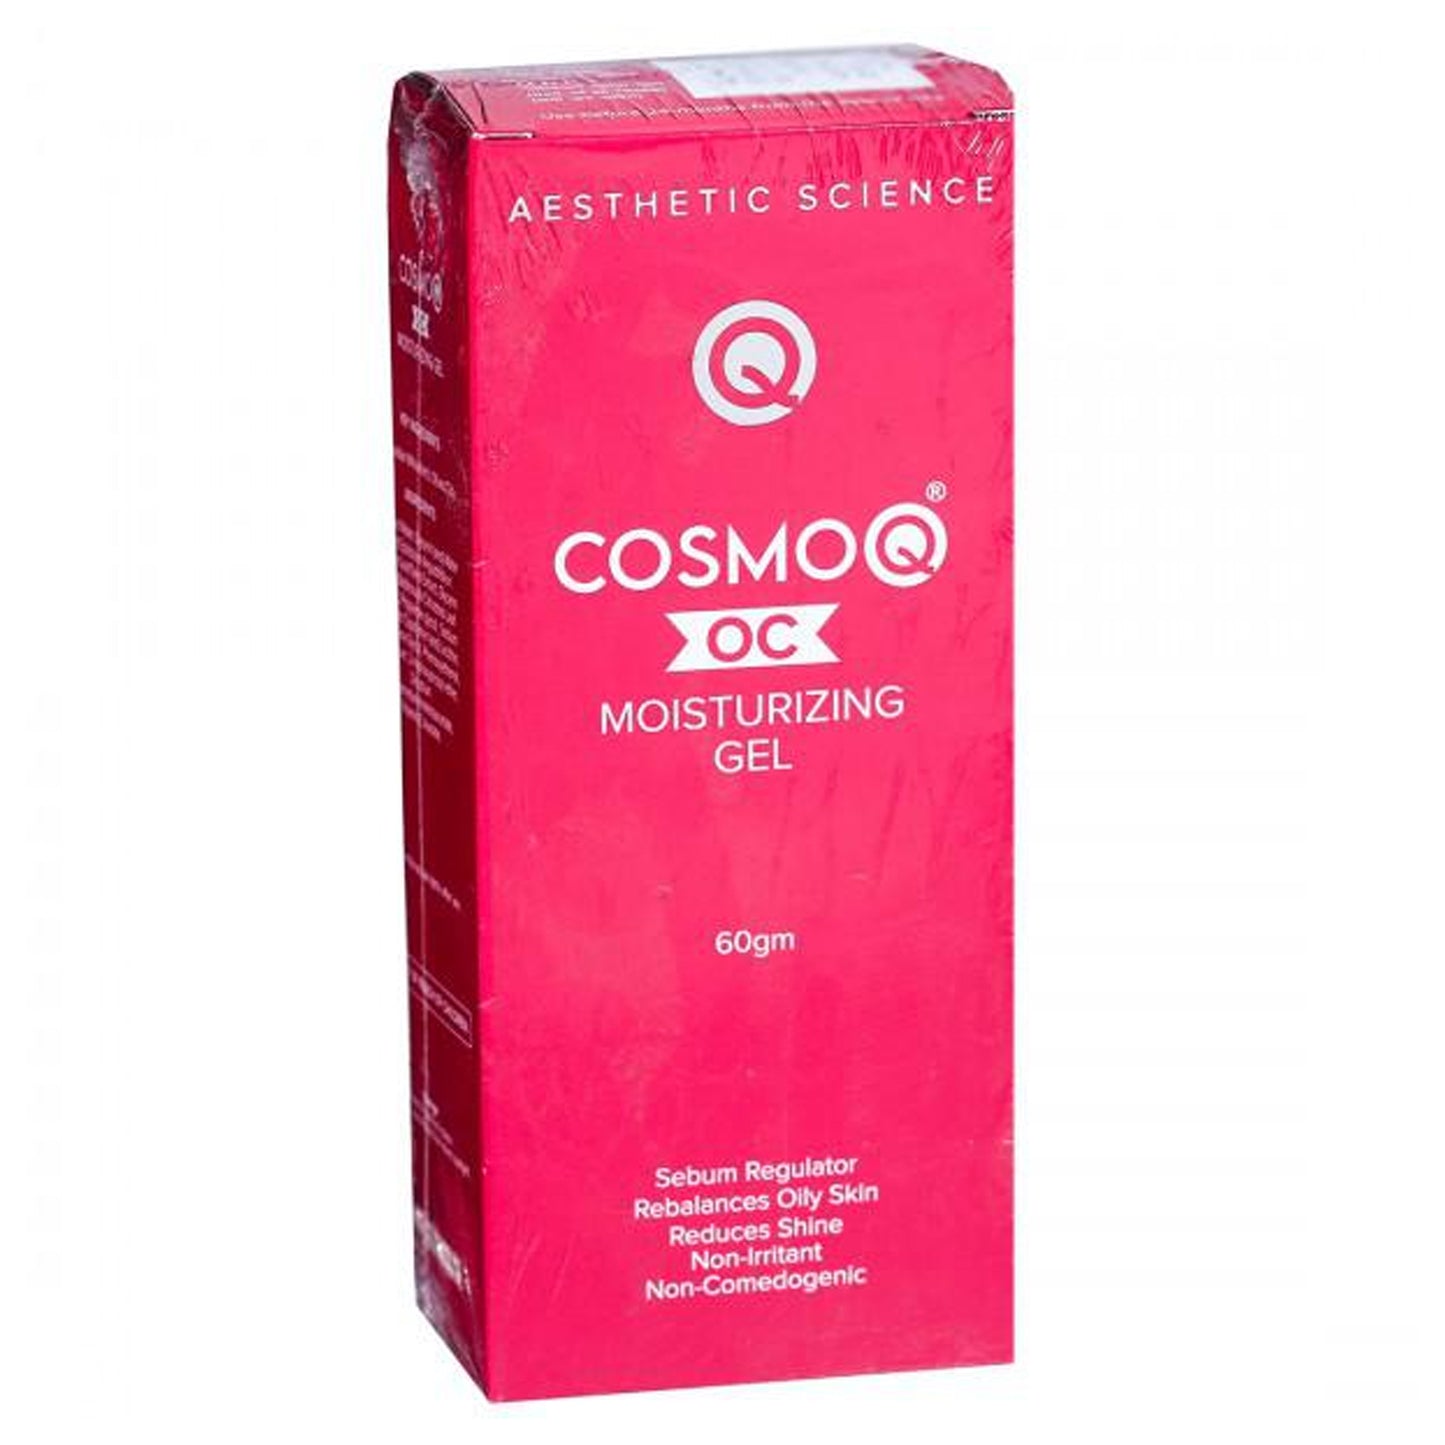 Cosmo Q OC Moisturizing Gel, 60gm